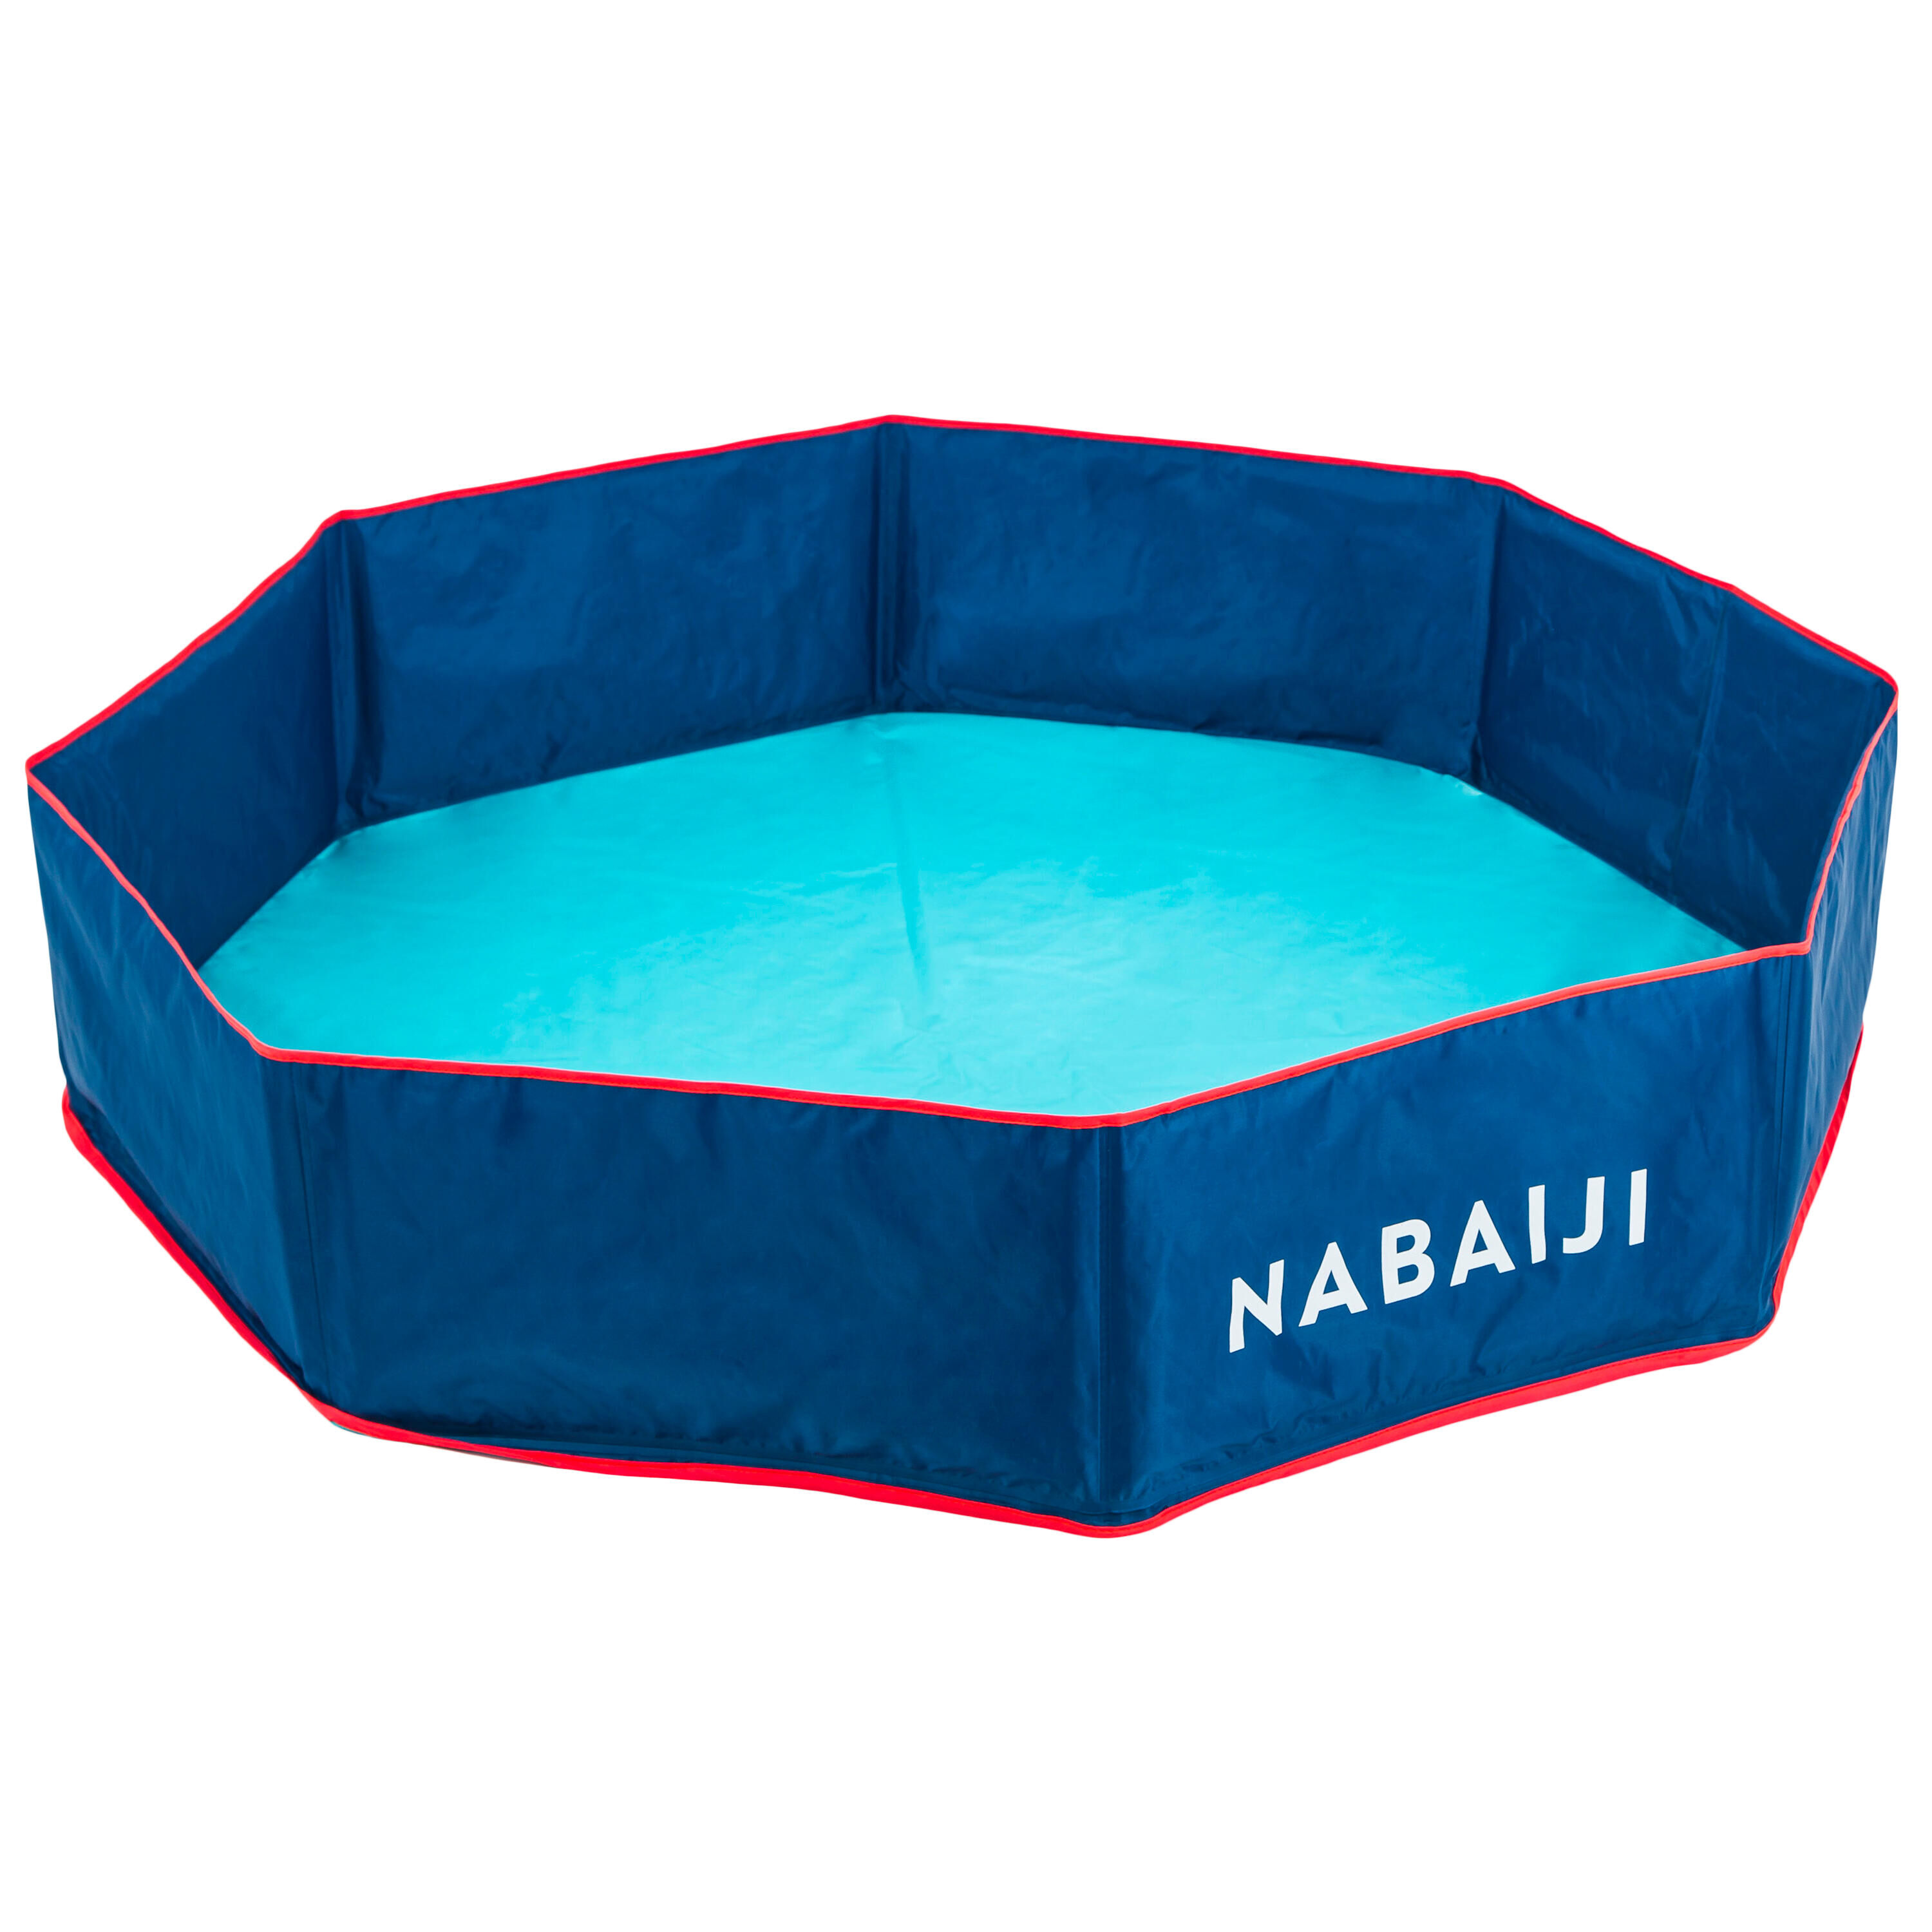 NABAIJI Swimming TIDIPOOL+ 120 cm kids paddling pool with waterproof carry bag - Blue